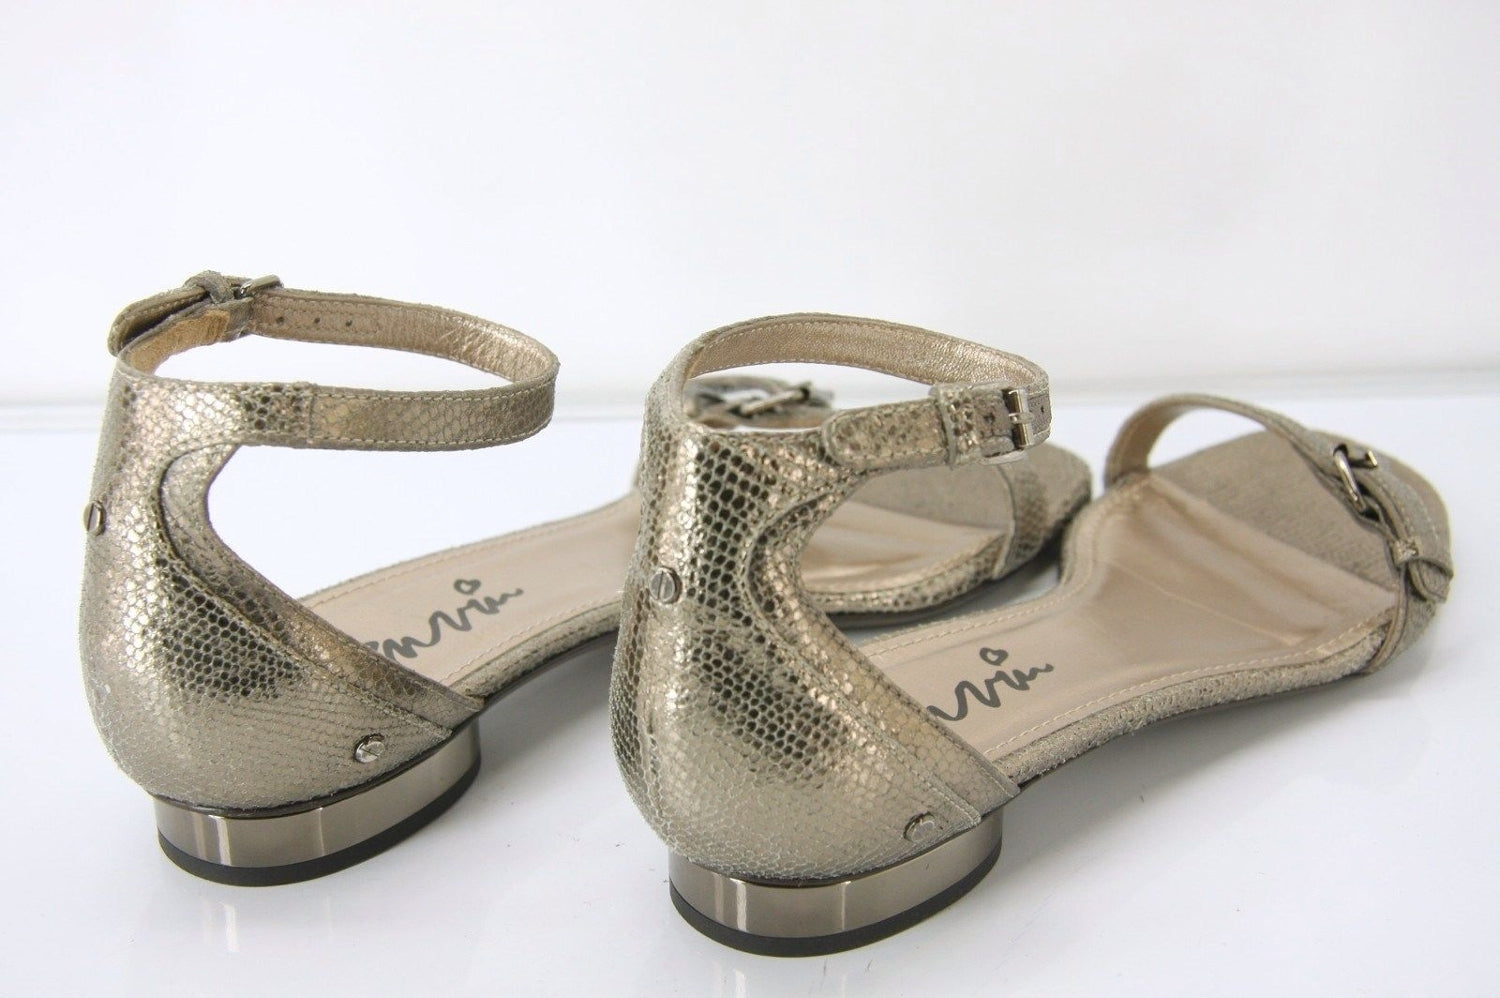 Lanvin Gold Snake Print Ankle Strappy Block Heel Flat Sandal SZ 37.5 New $790